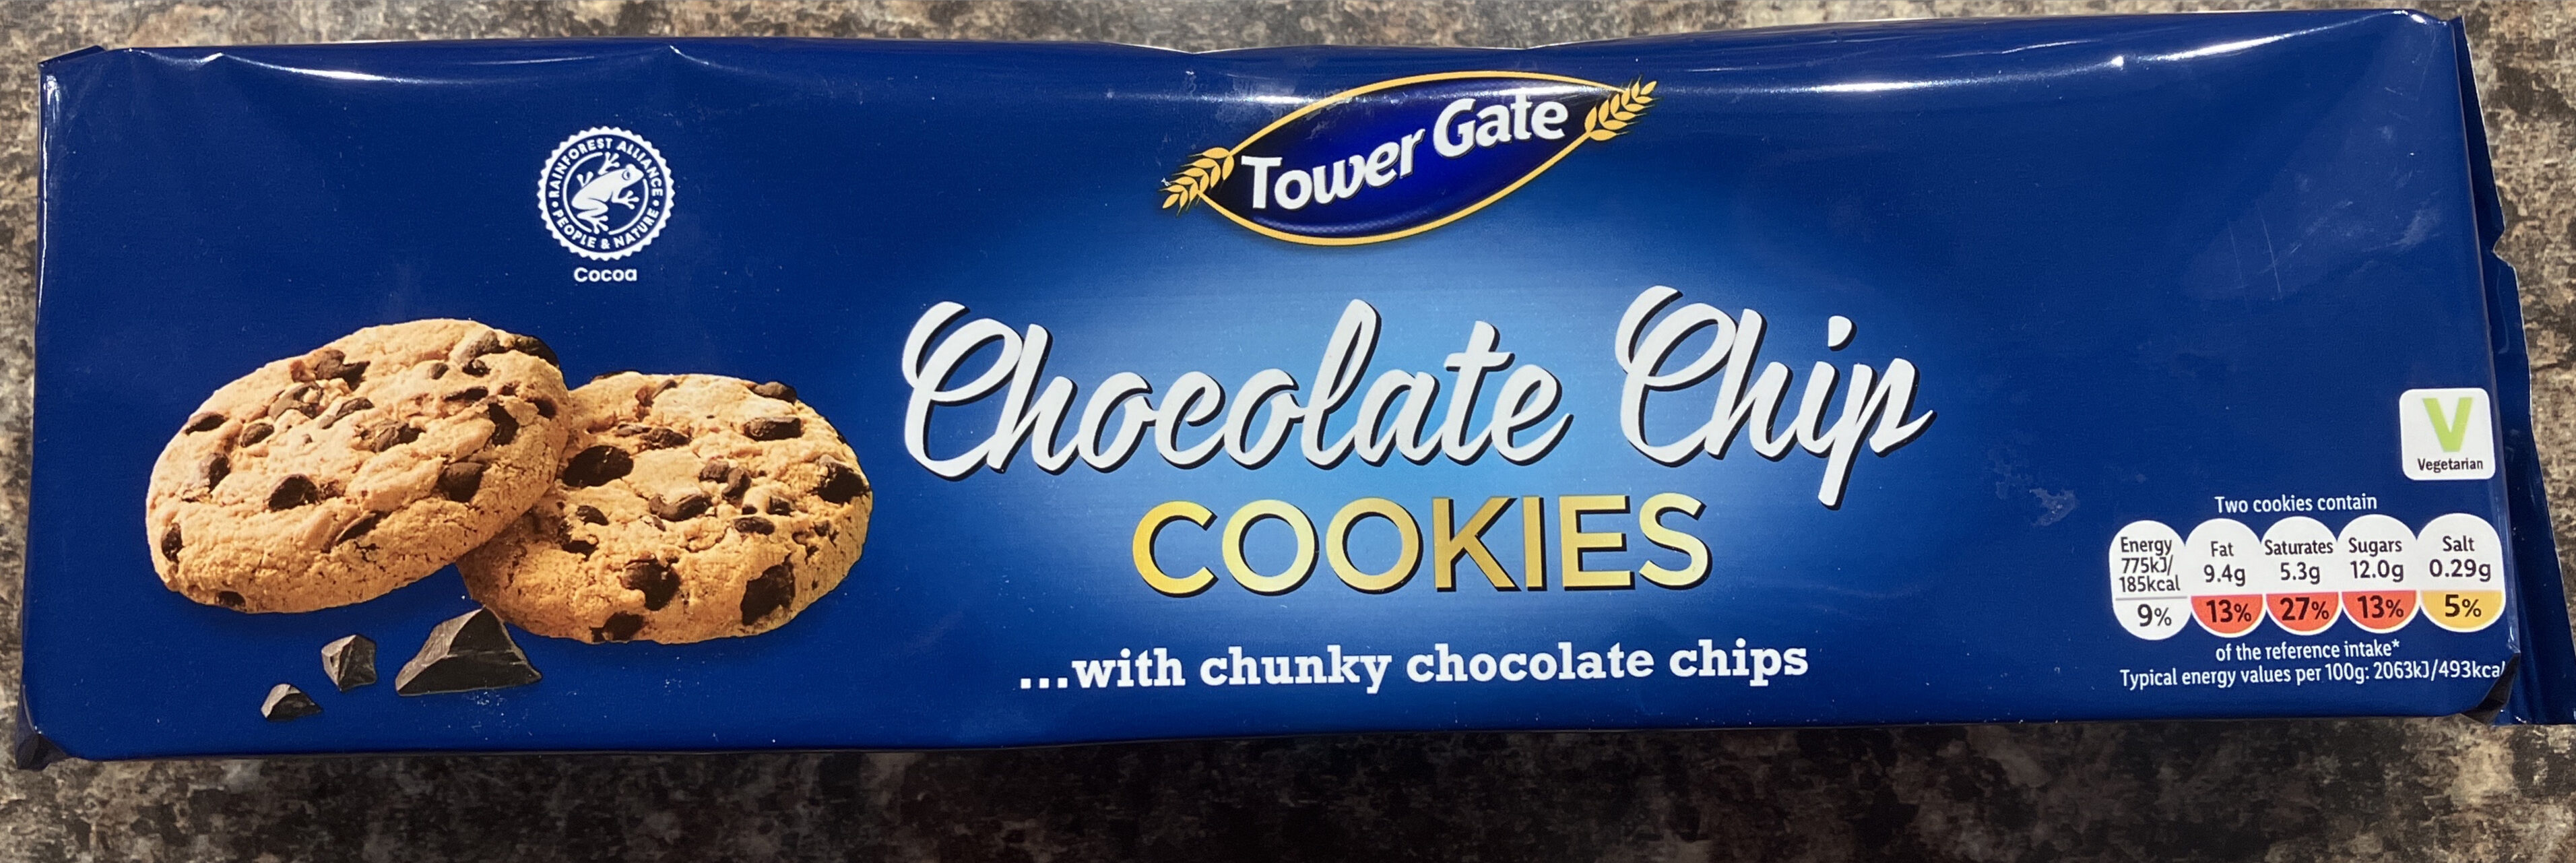 tower gate chocolate chip cookies - Product - en